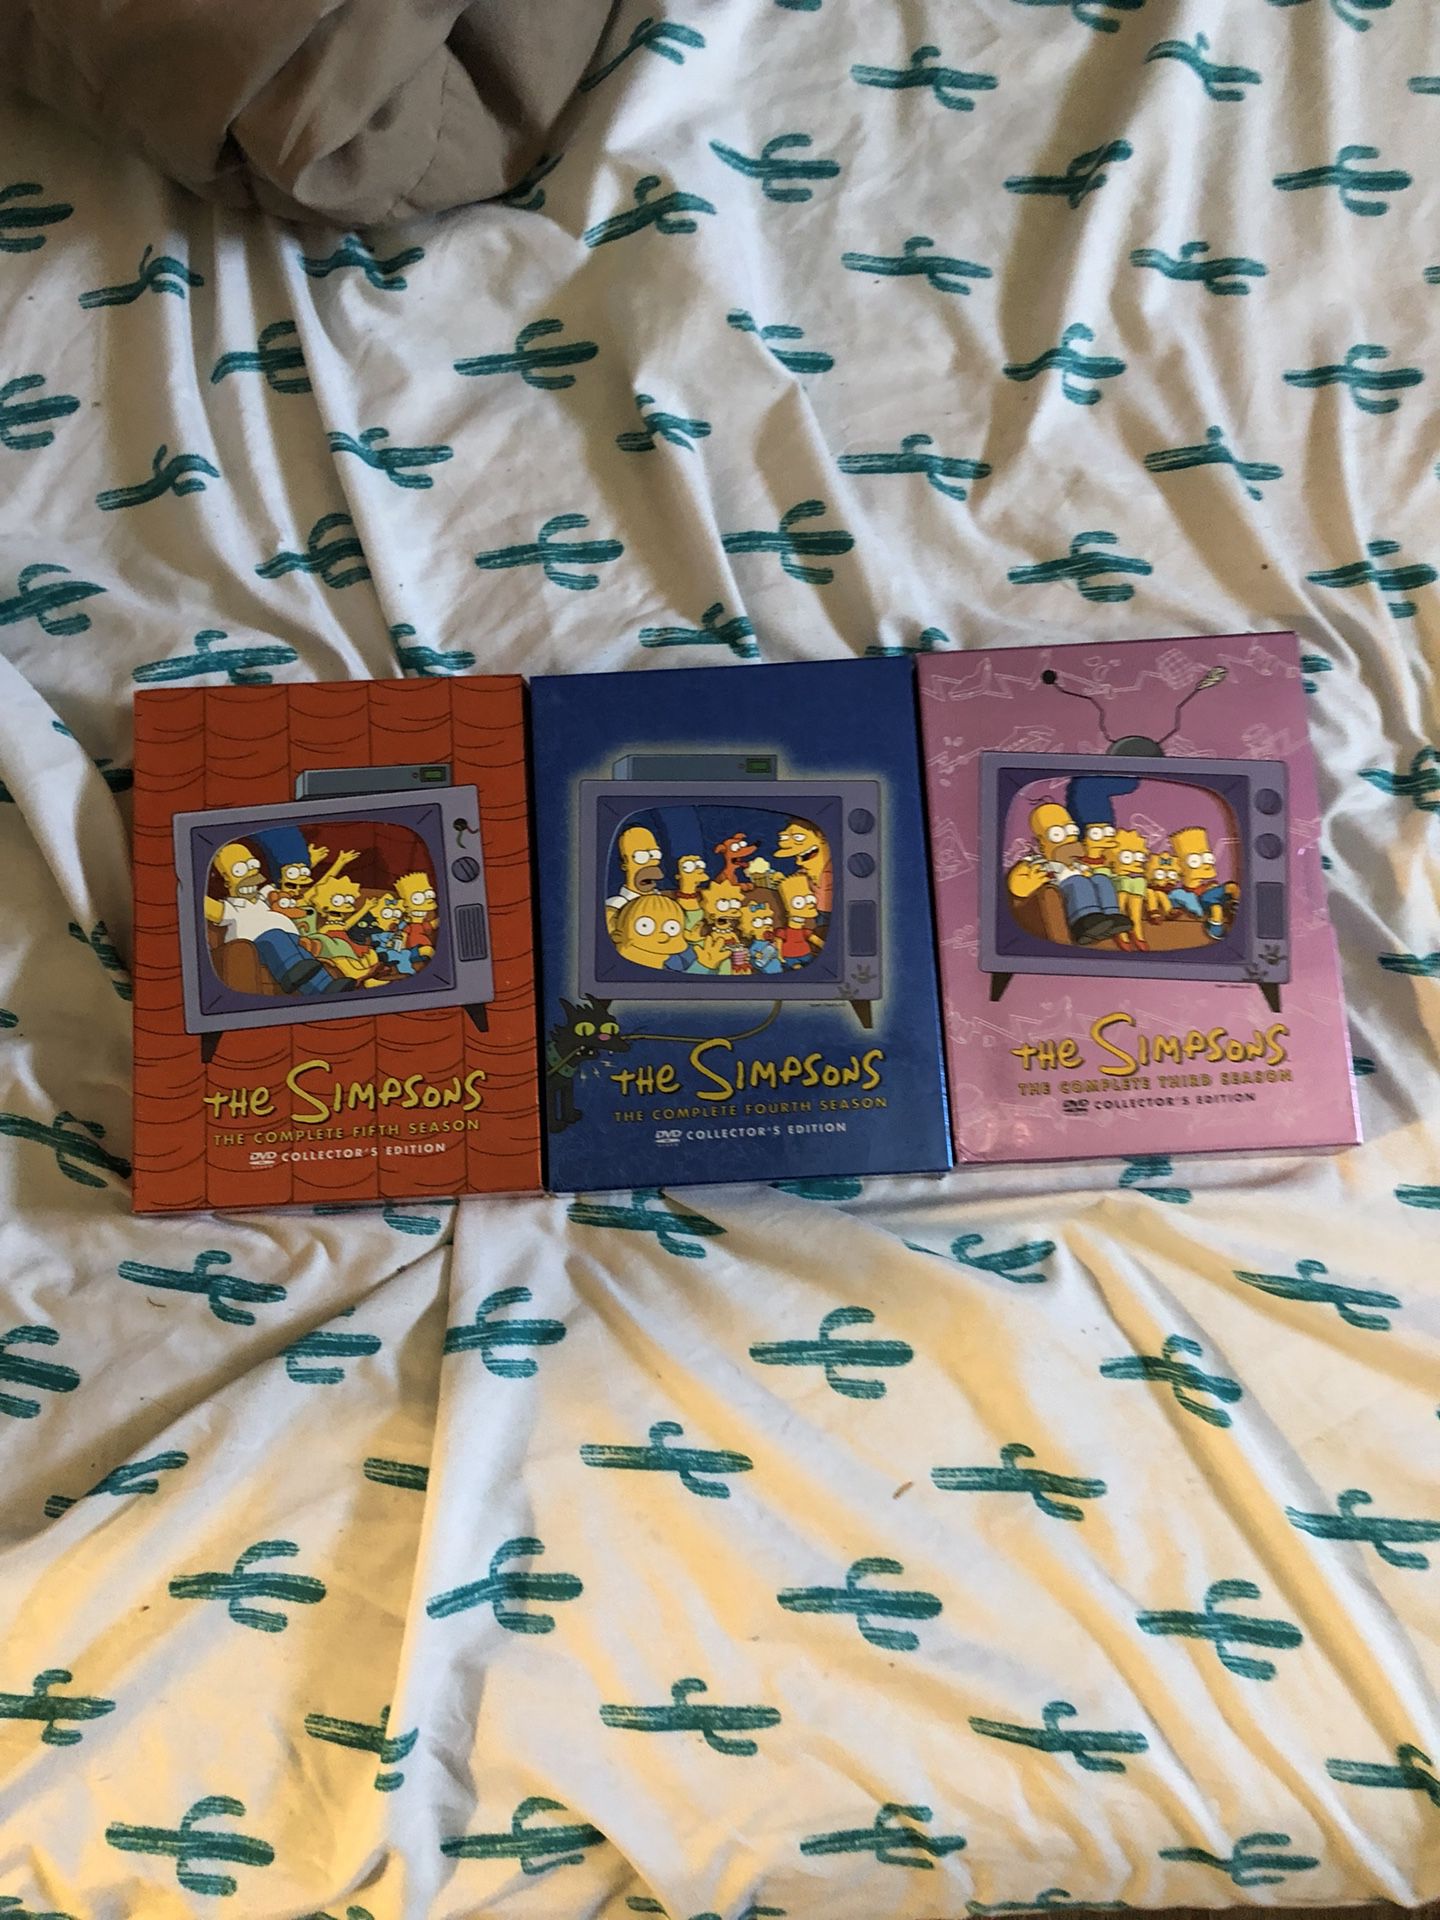 Simpson’s box sets. All 3